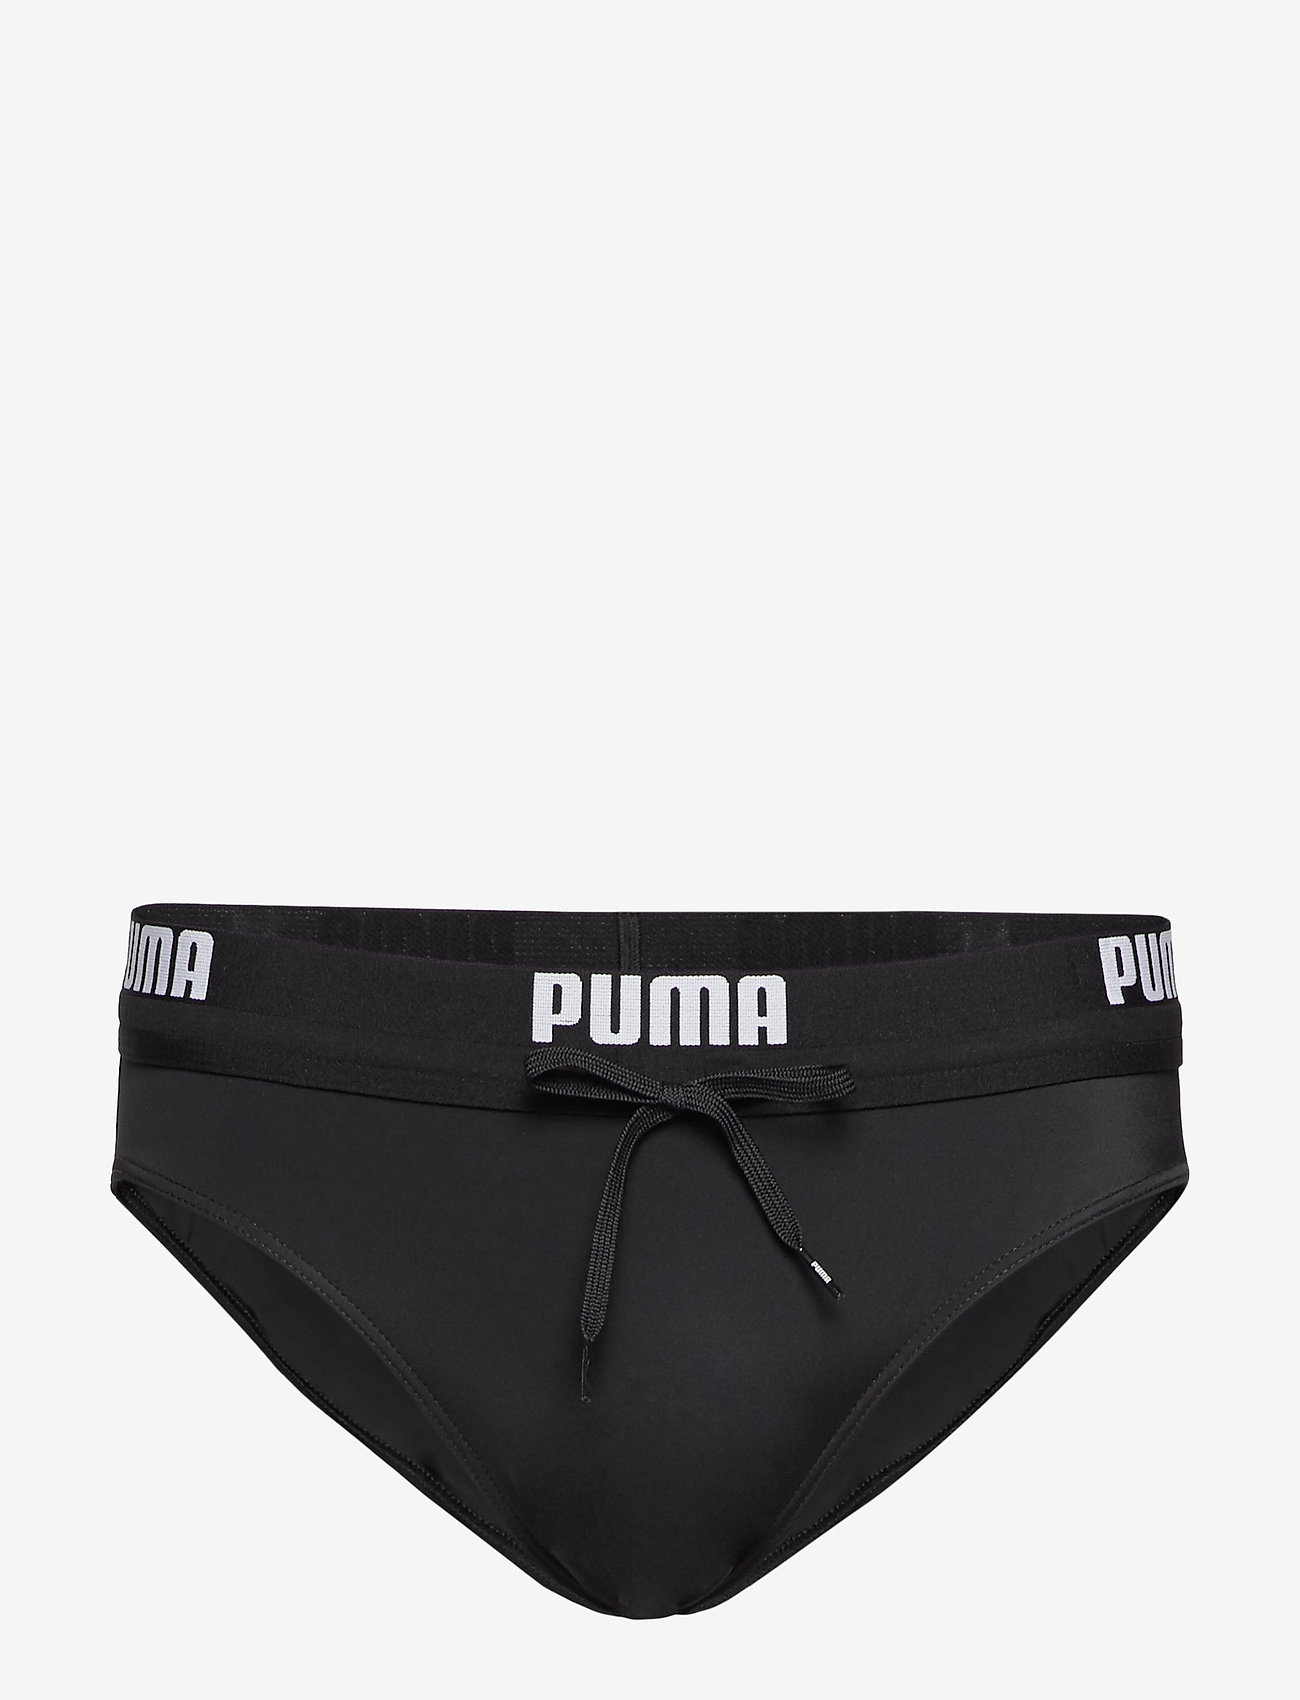 puma swimwear